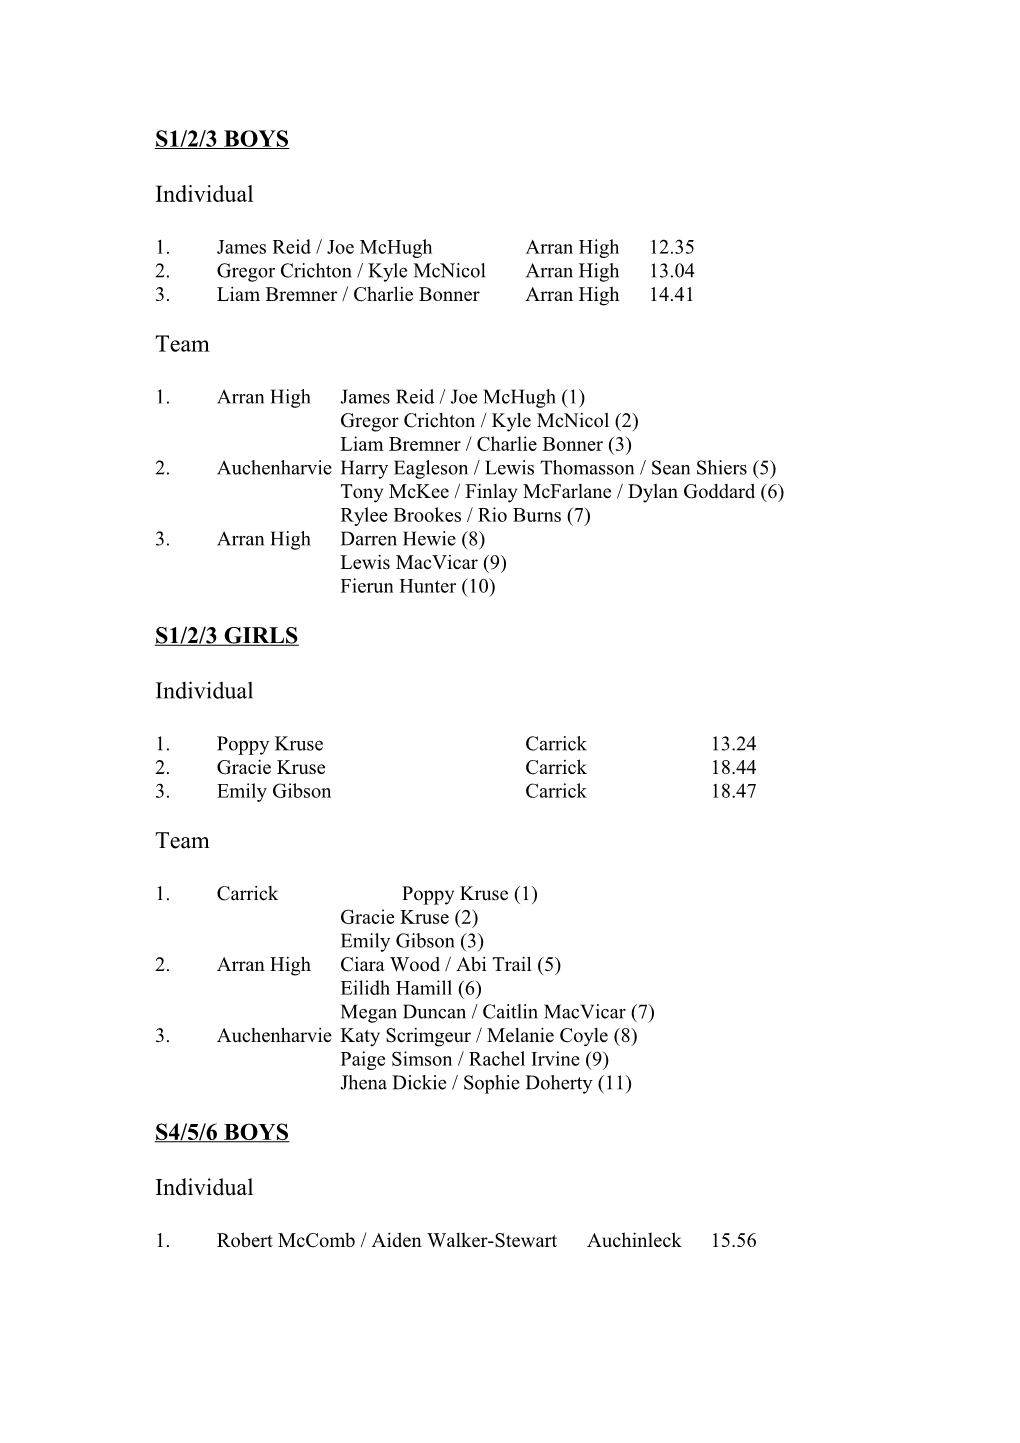 Ayrshire Schools Orienteering Championships 2016 Results